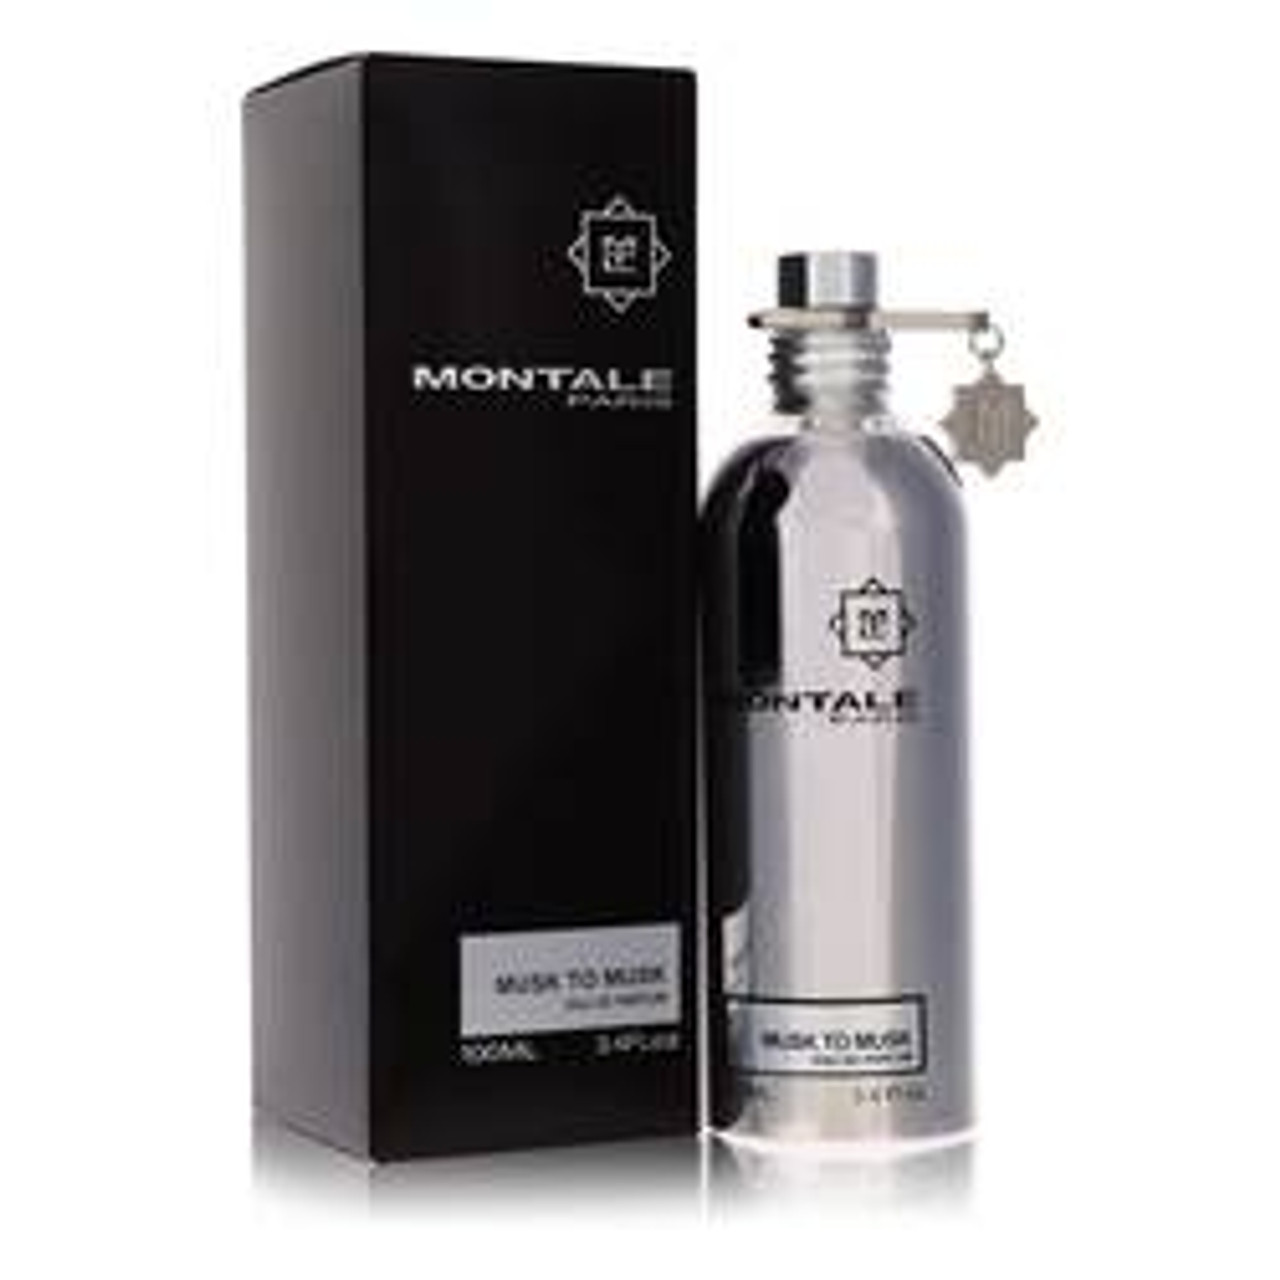 Montale Musk To Musk Perfume By Montale Eau De Parfum Spray (Unisex) 3.4 oz for Women - *Pre-Order